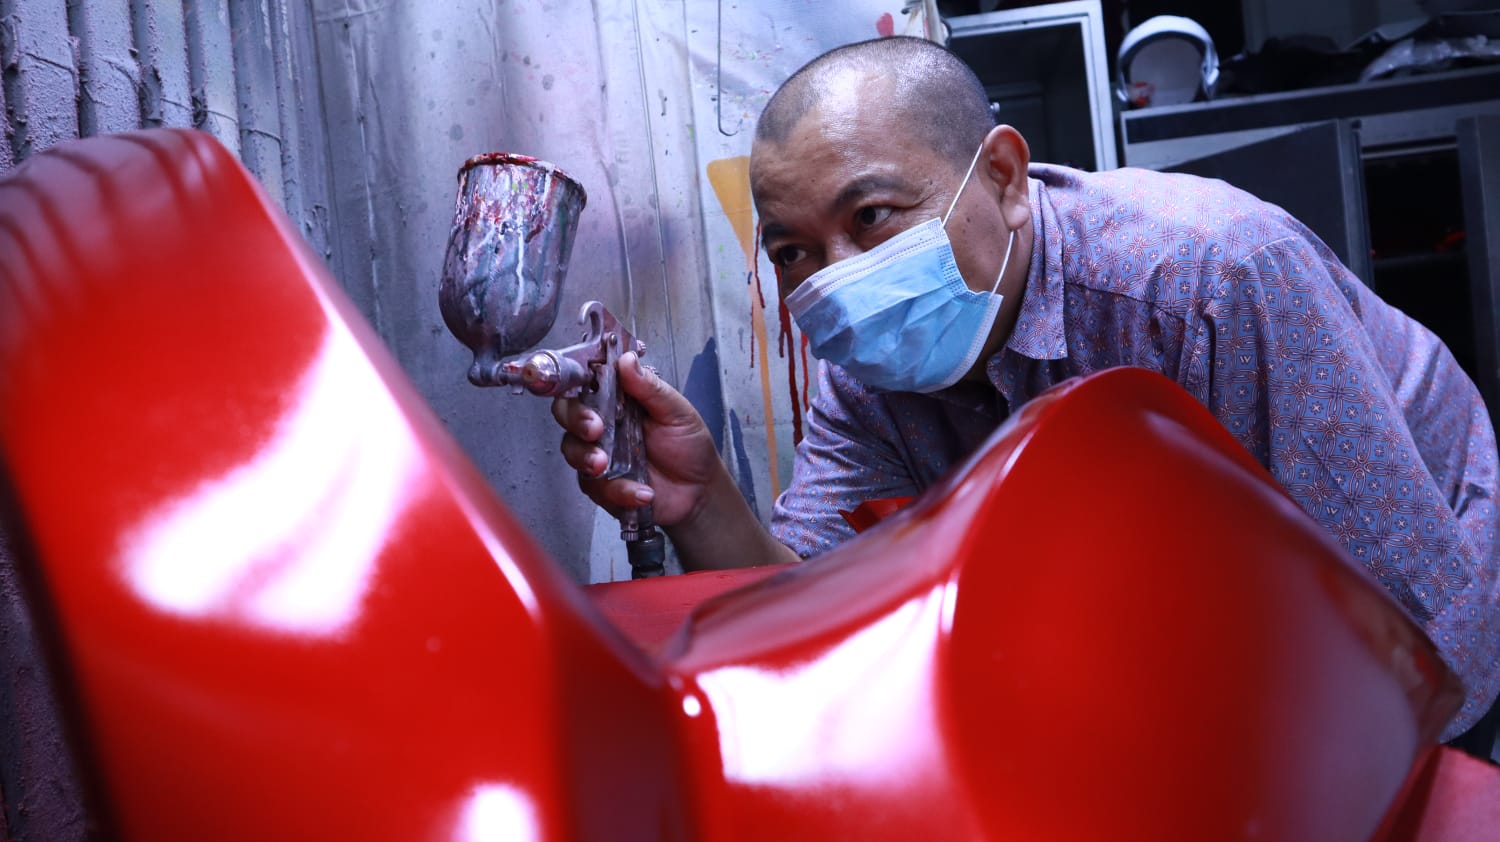 Wahana Honda Hadirkan Layanan Painting Shop, Harga Mulai Rp 150 Ribuan